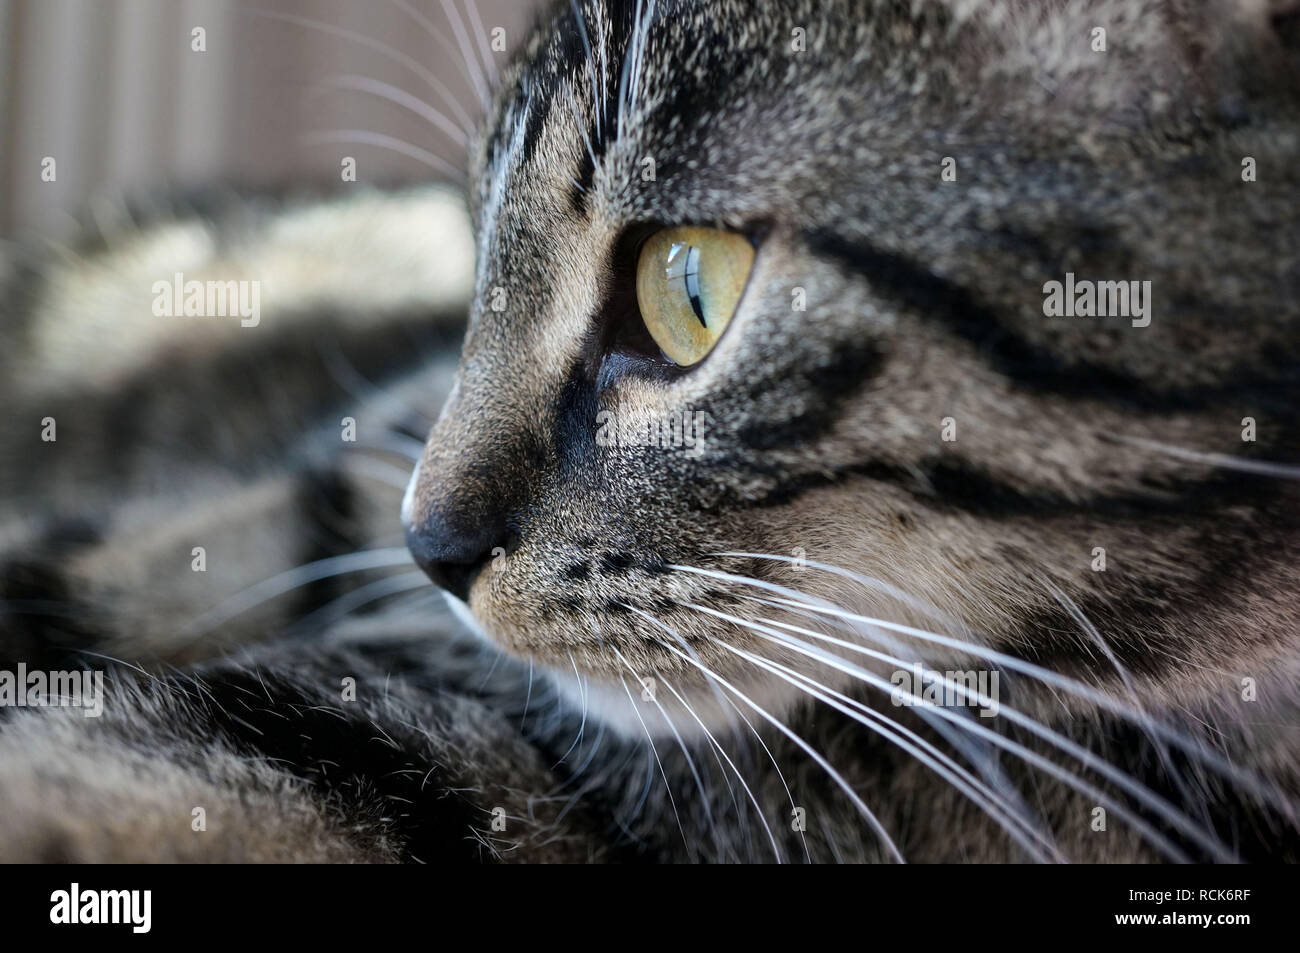 Closeup retrato de una joven dulce gato atigrado Foto de stock